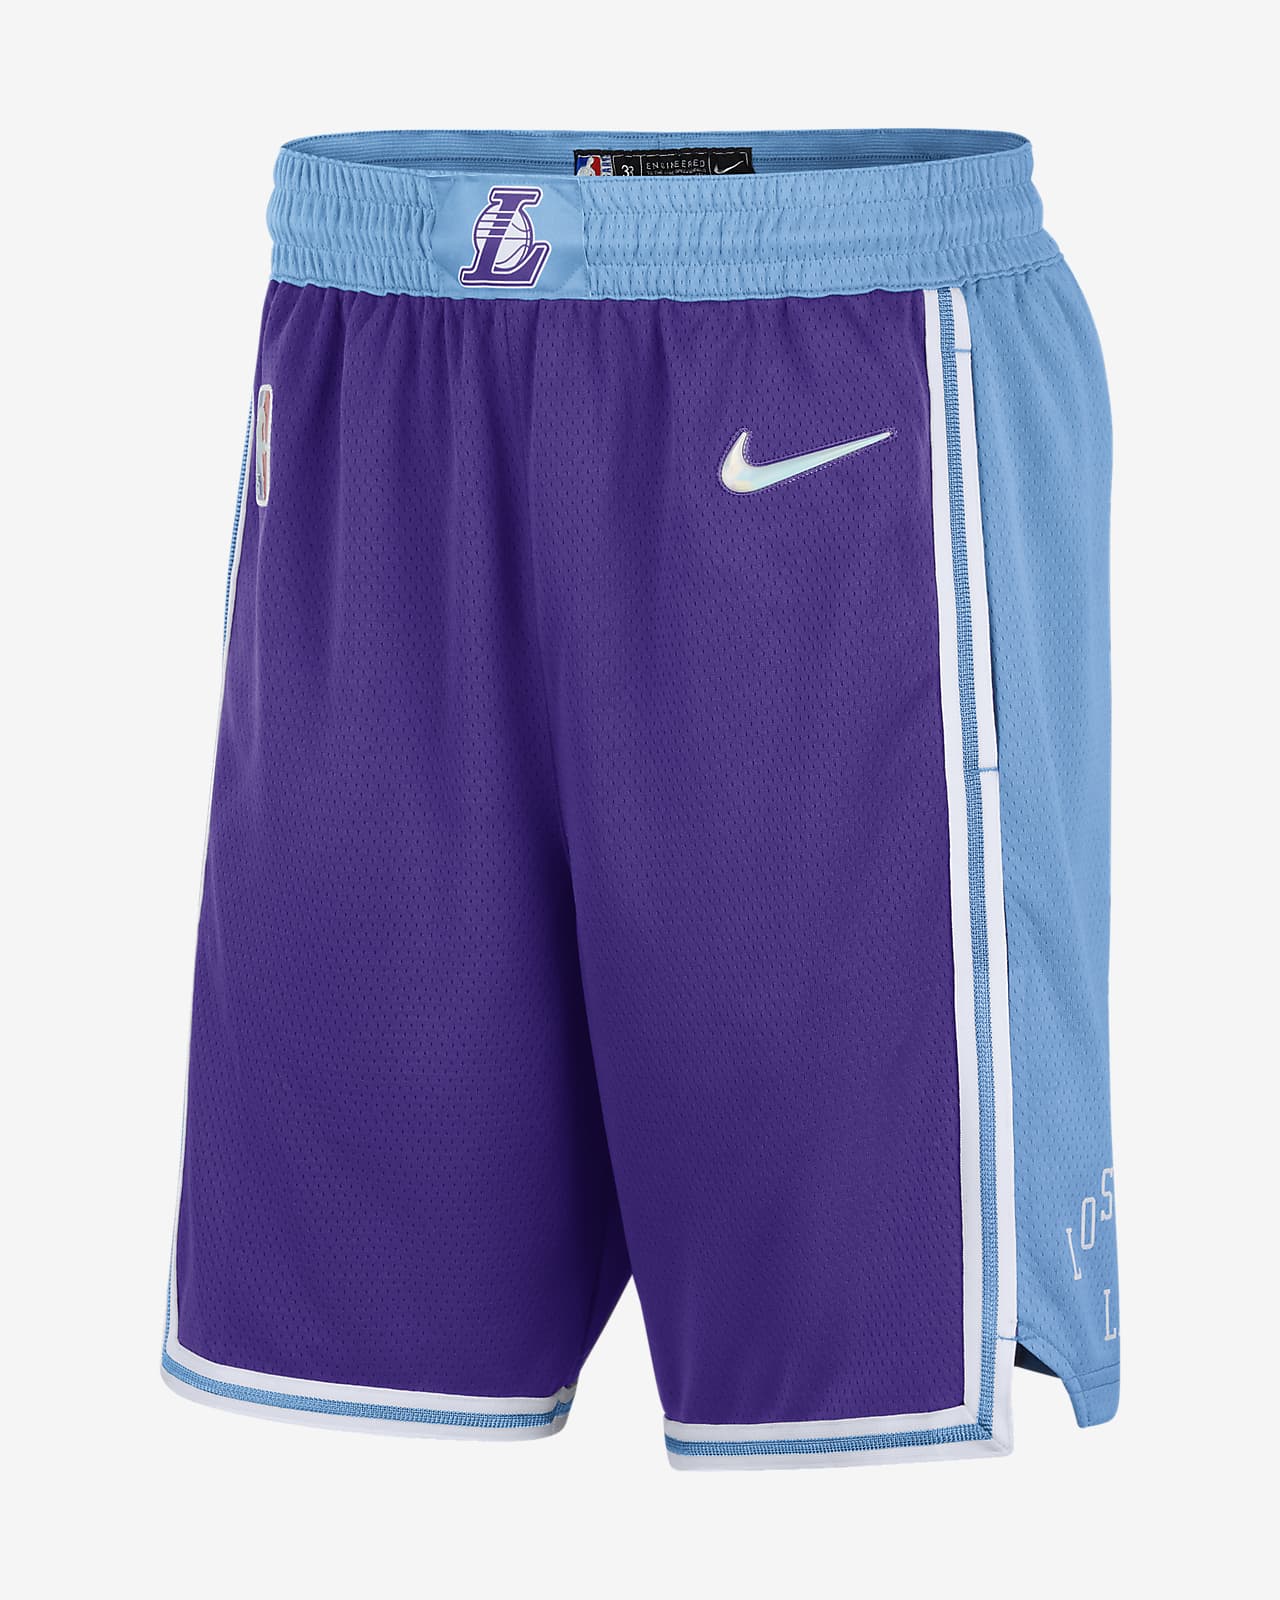 Los Angeles Lakers City Edition Pantalons curts Nike Dri-FIT NBA Swingman - Home